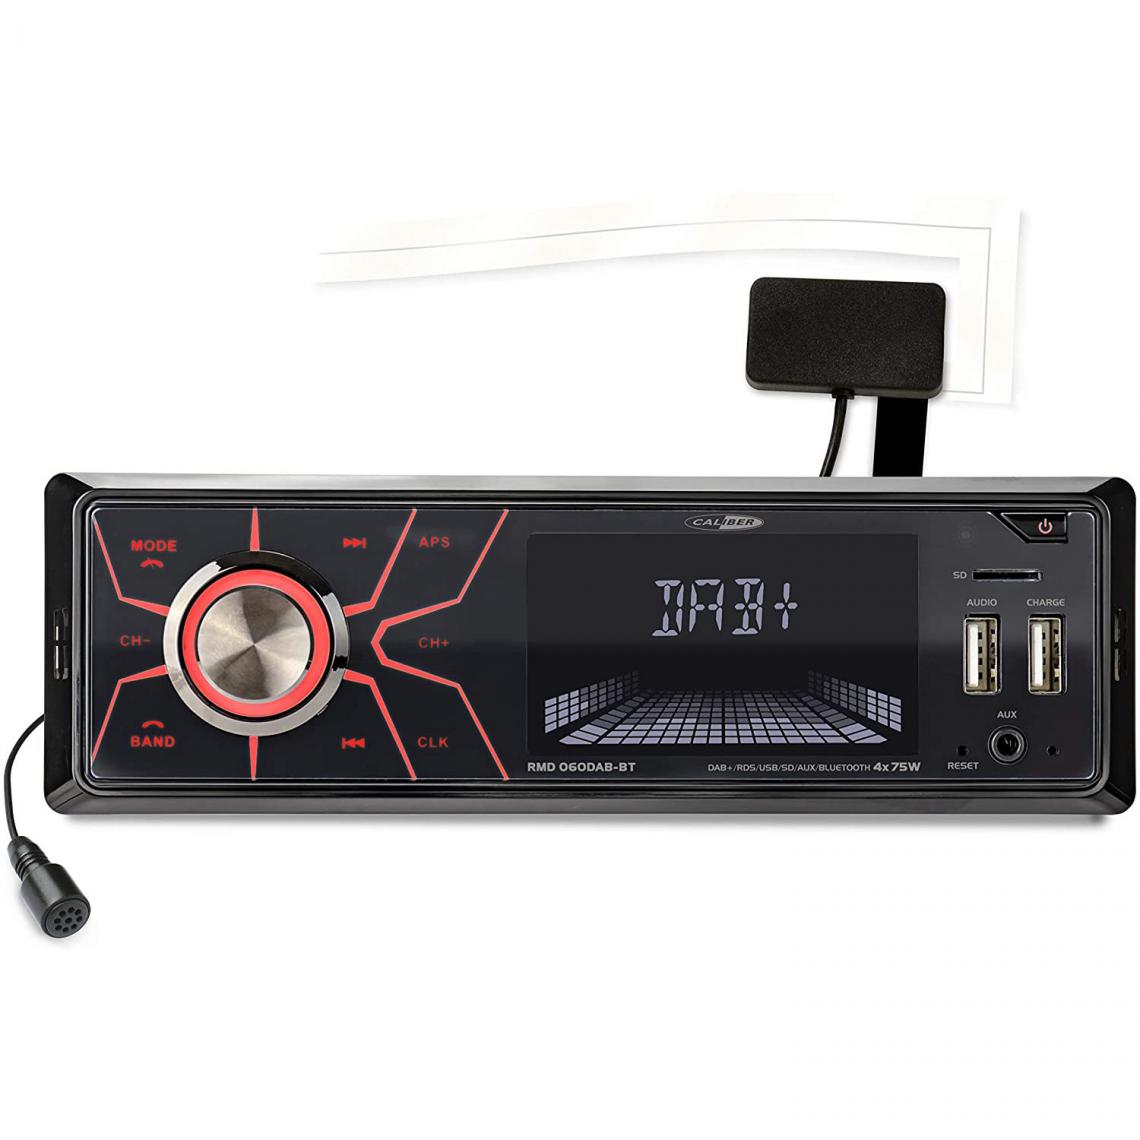 Caliber - Autoradio Caliber RMD060DAB-BT - Radio, radio DAB, lecteur de cartes SD, USB - Radio